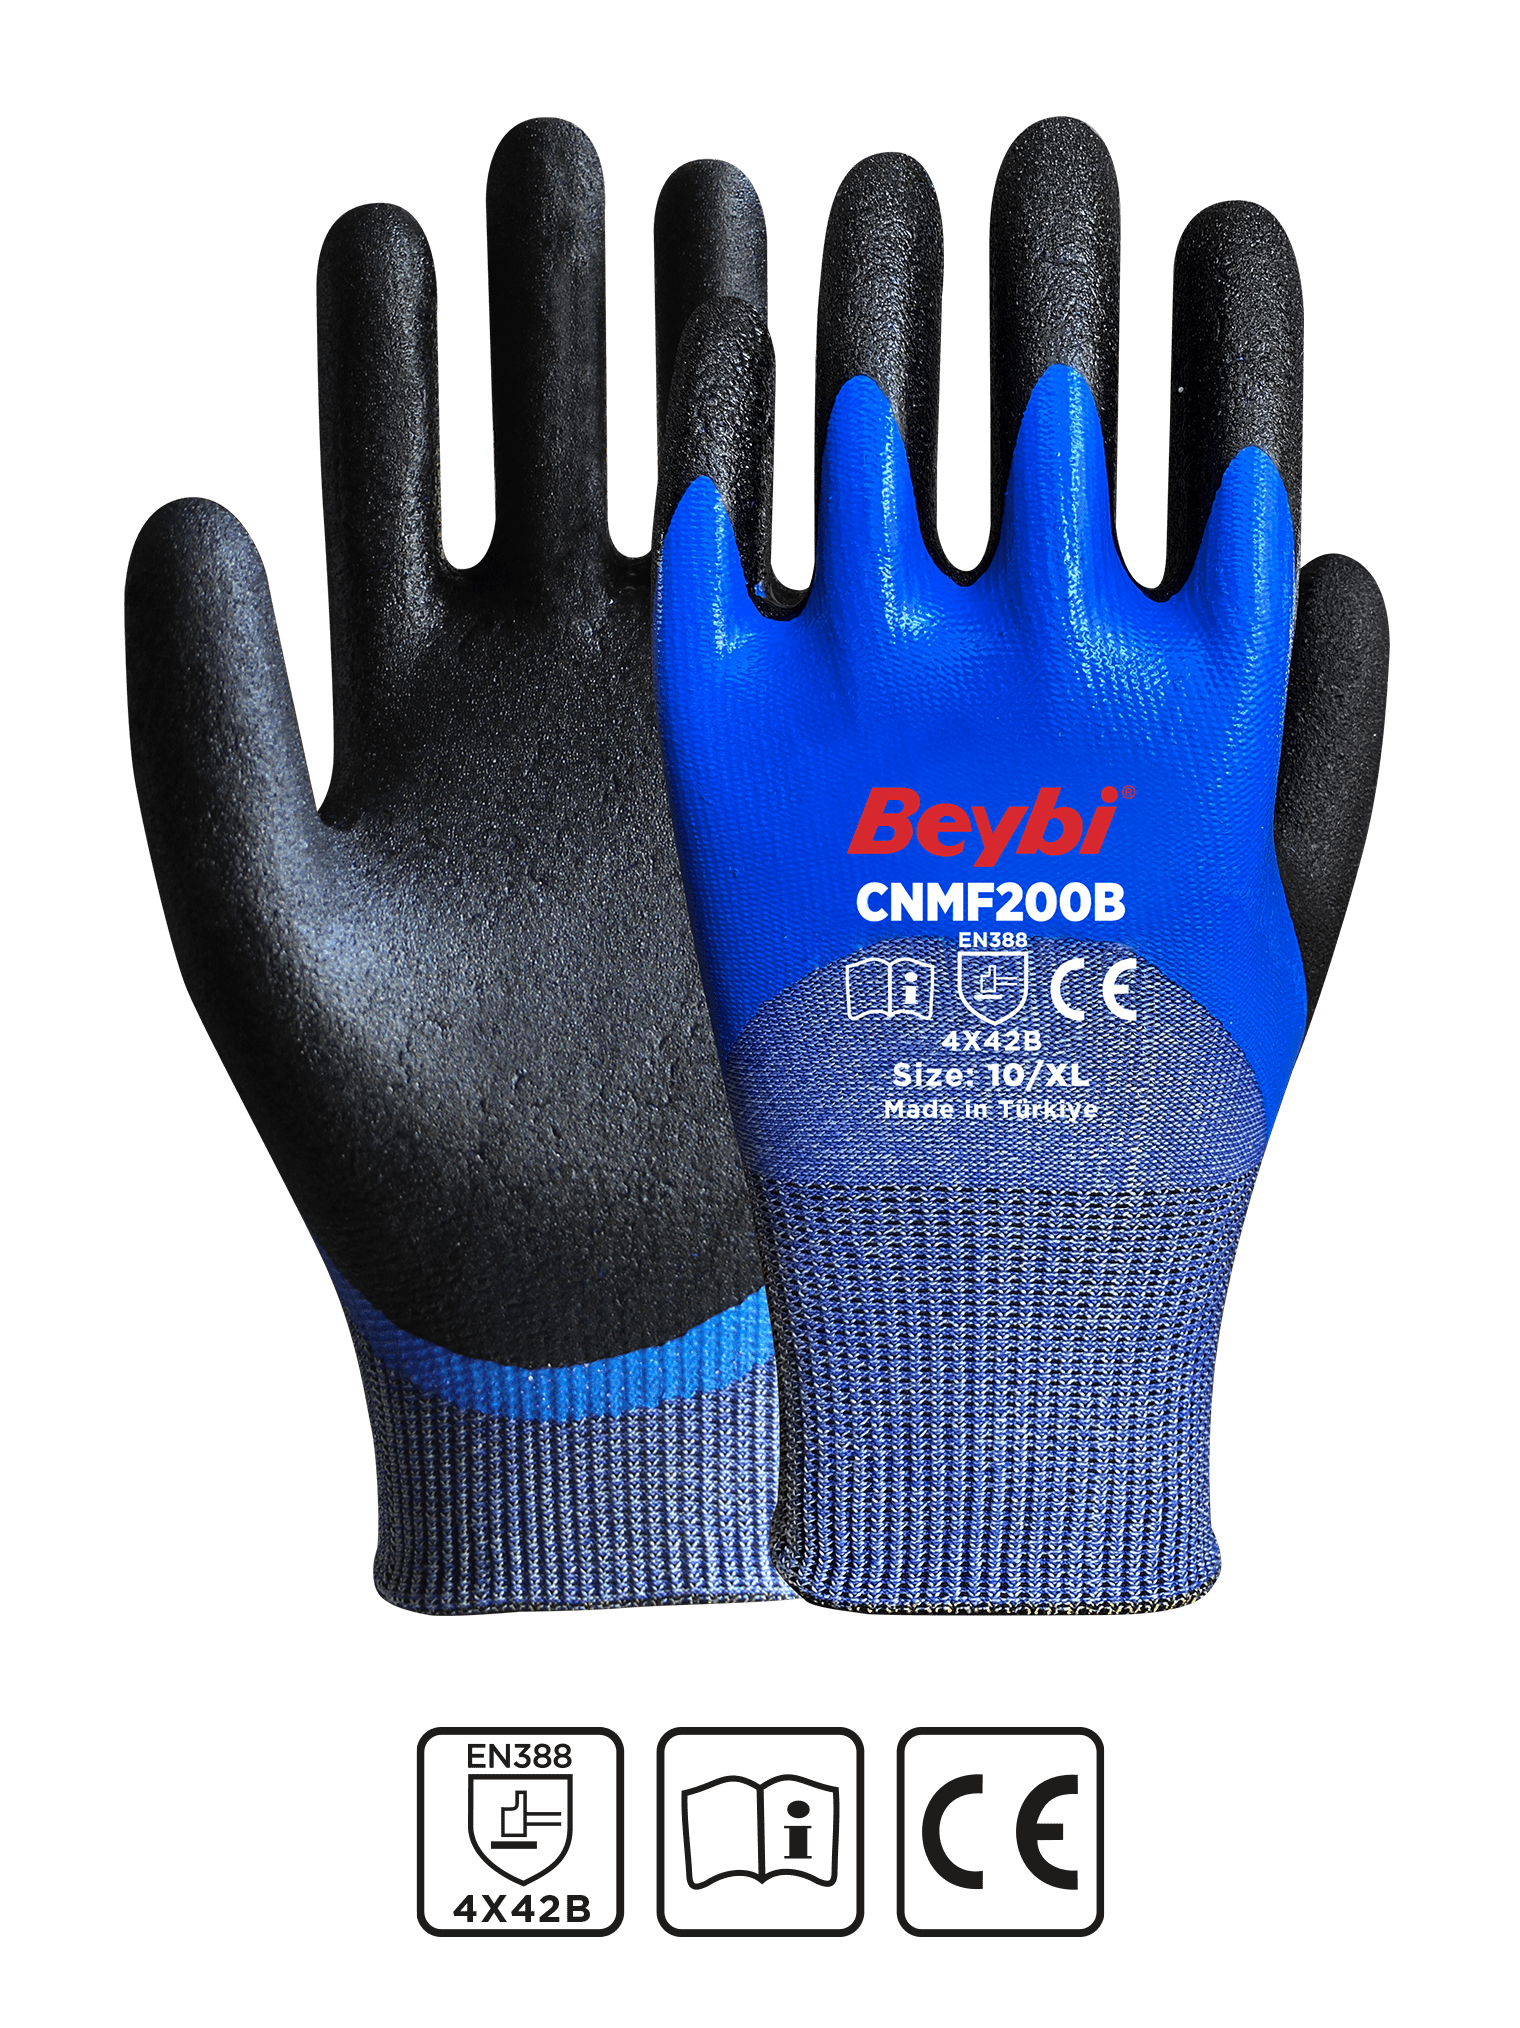 CNMF200B Double Micro Foam Nitrile Coated Cut Resistant Glove